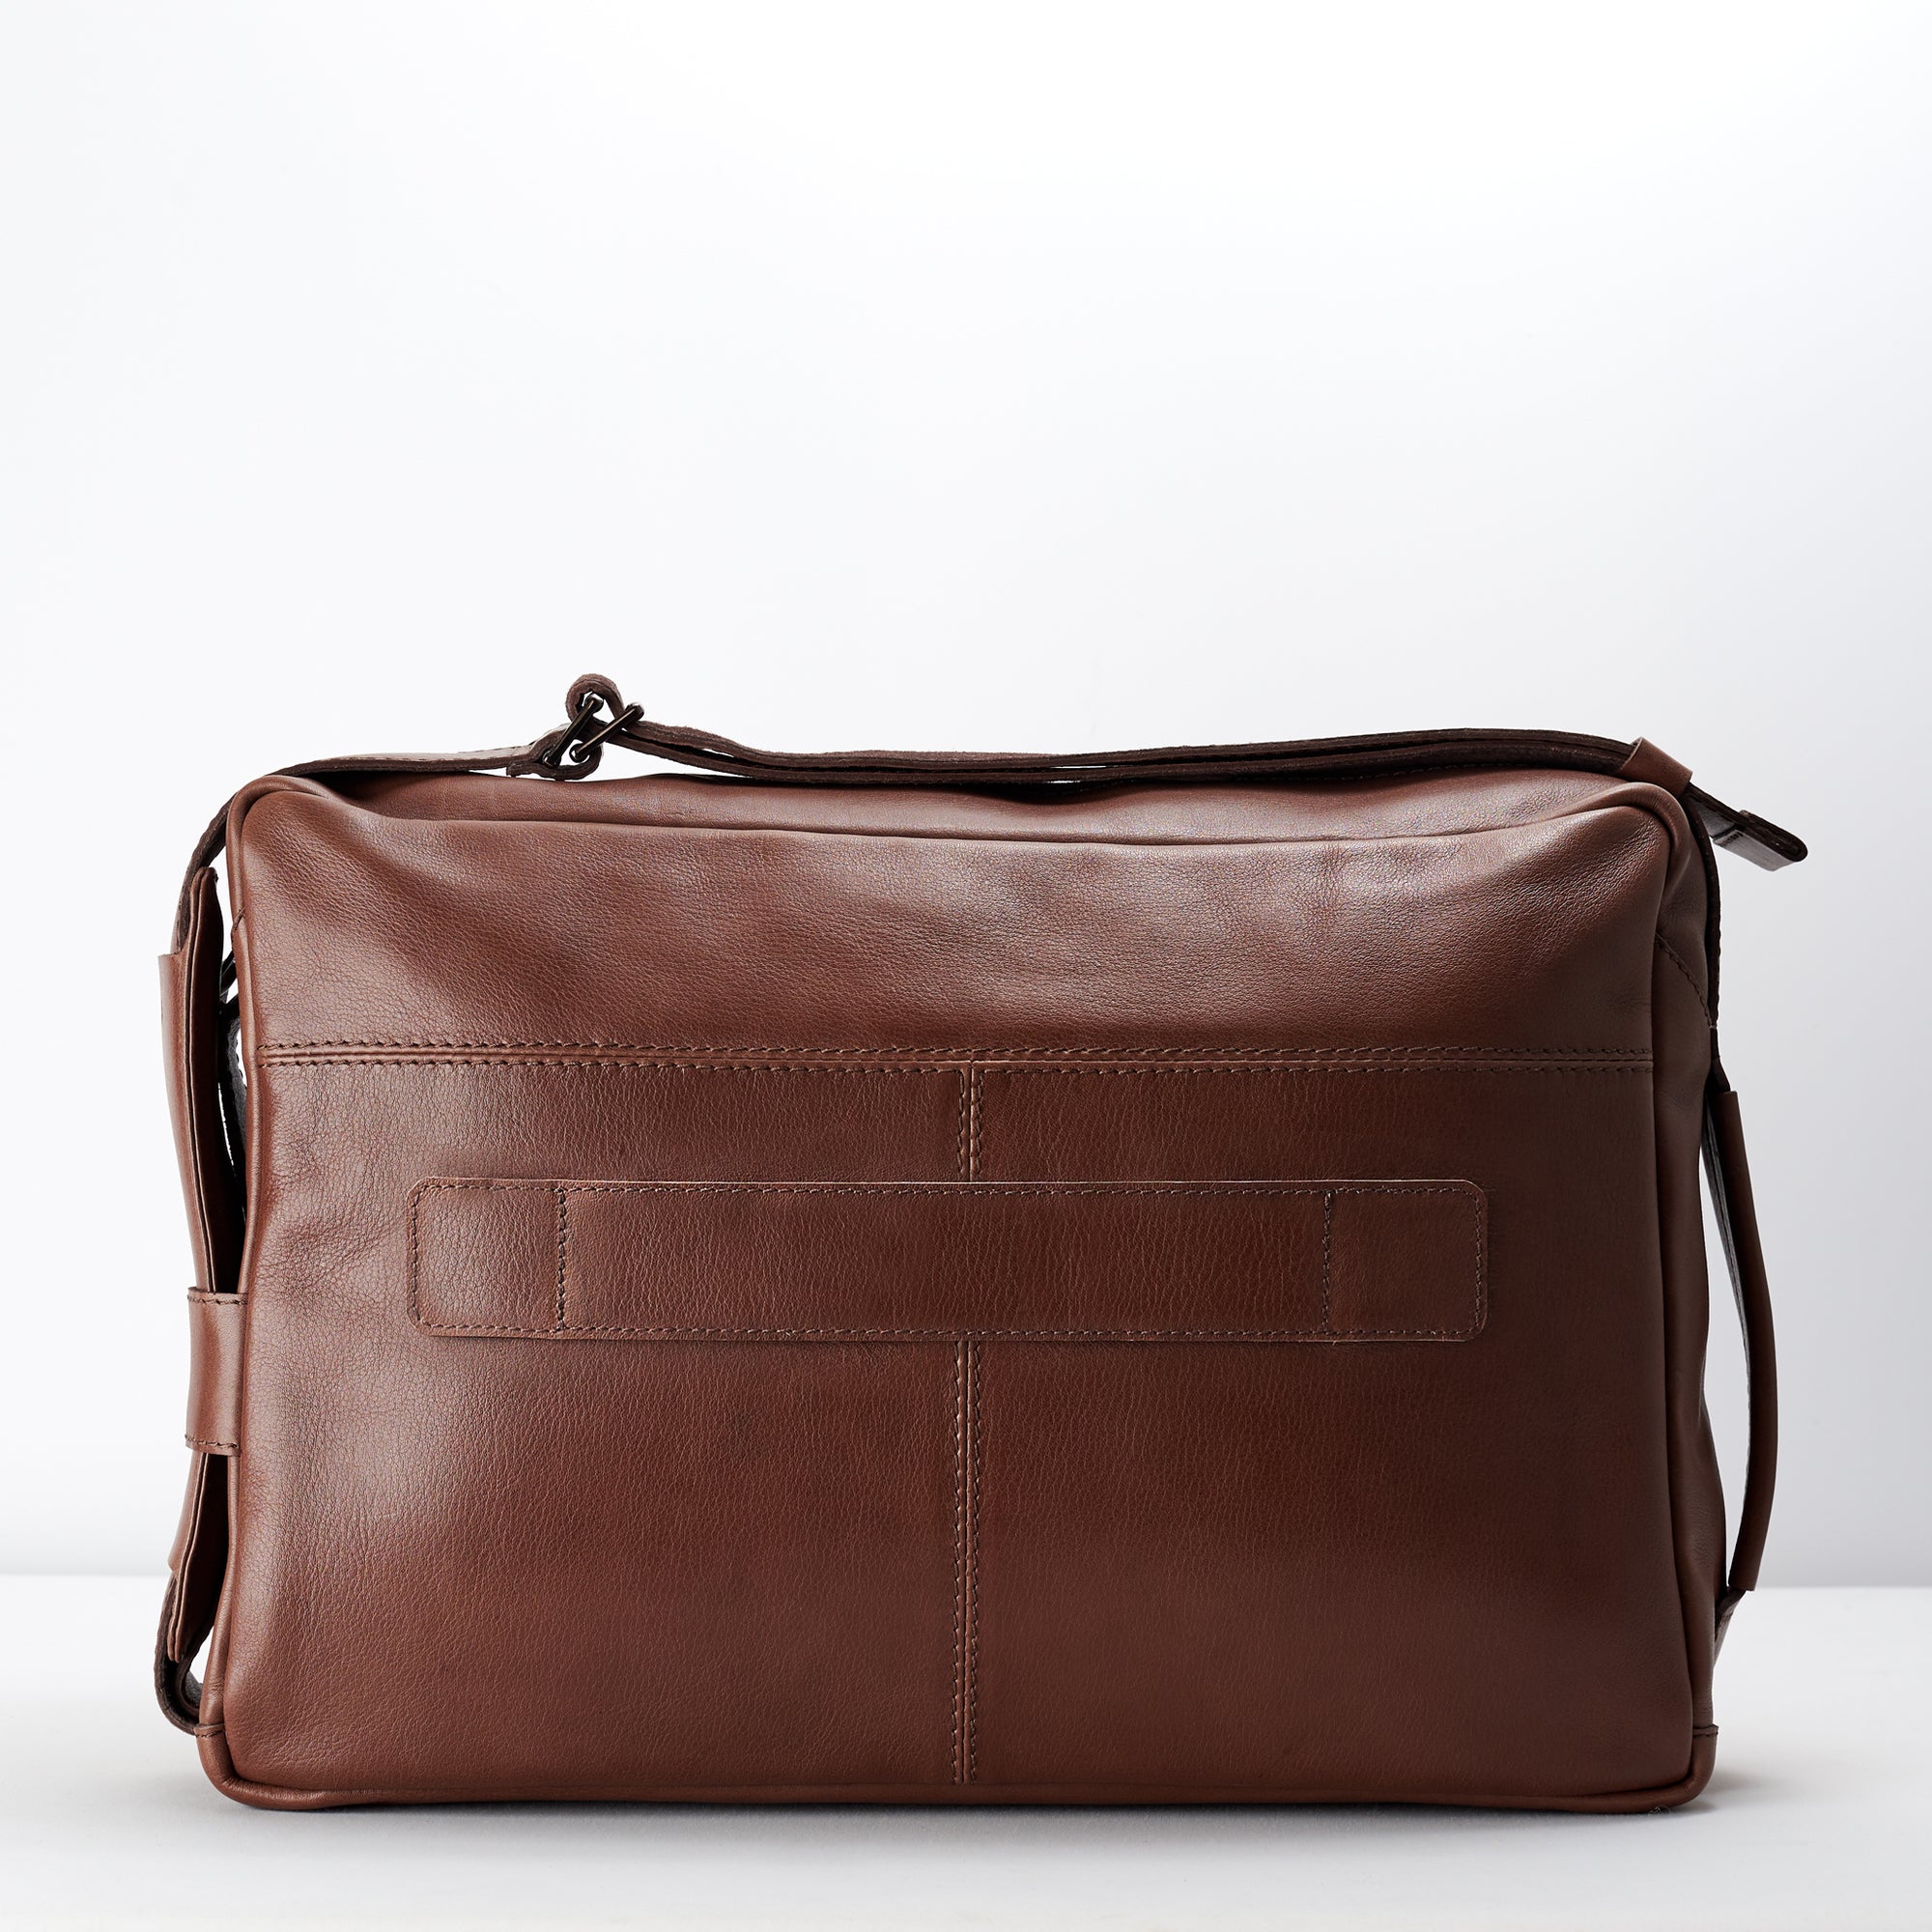 Luggage strap. Handmade leather messenger bag for men. Commuter bag, laptop leather bag by Capra Leather.